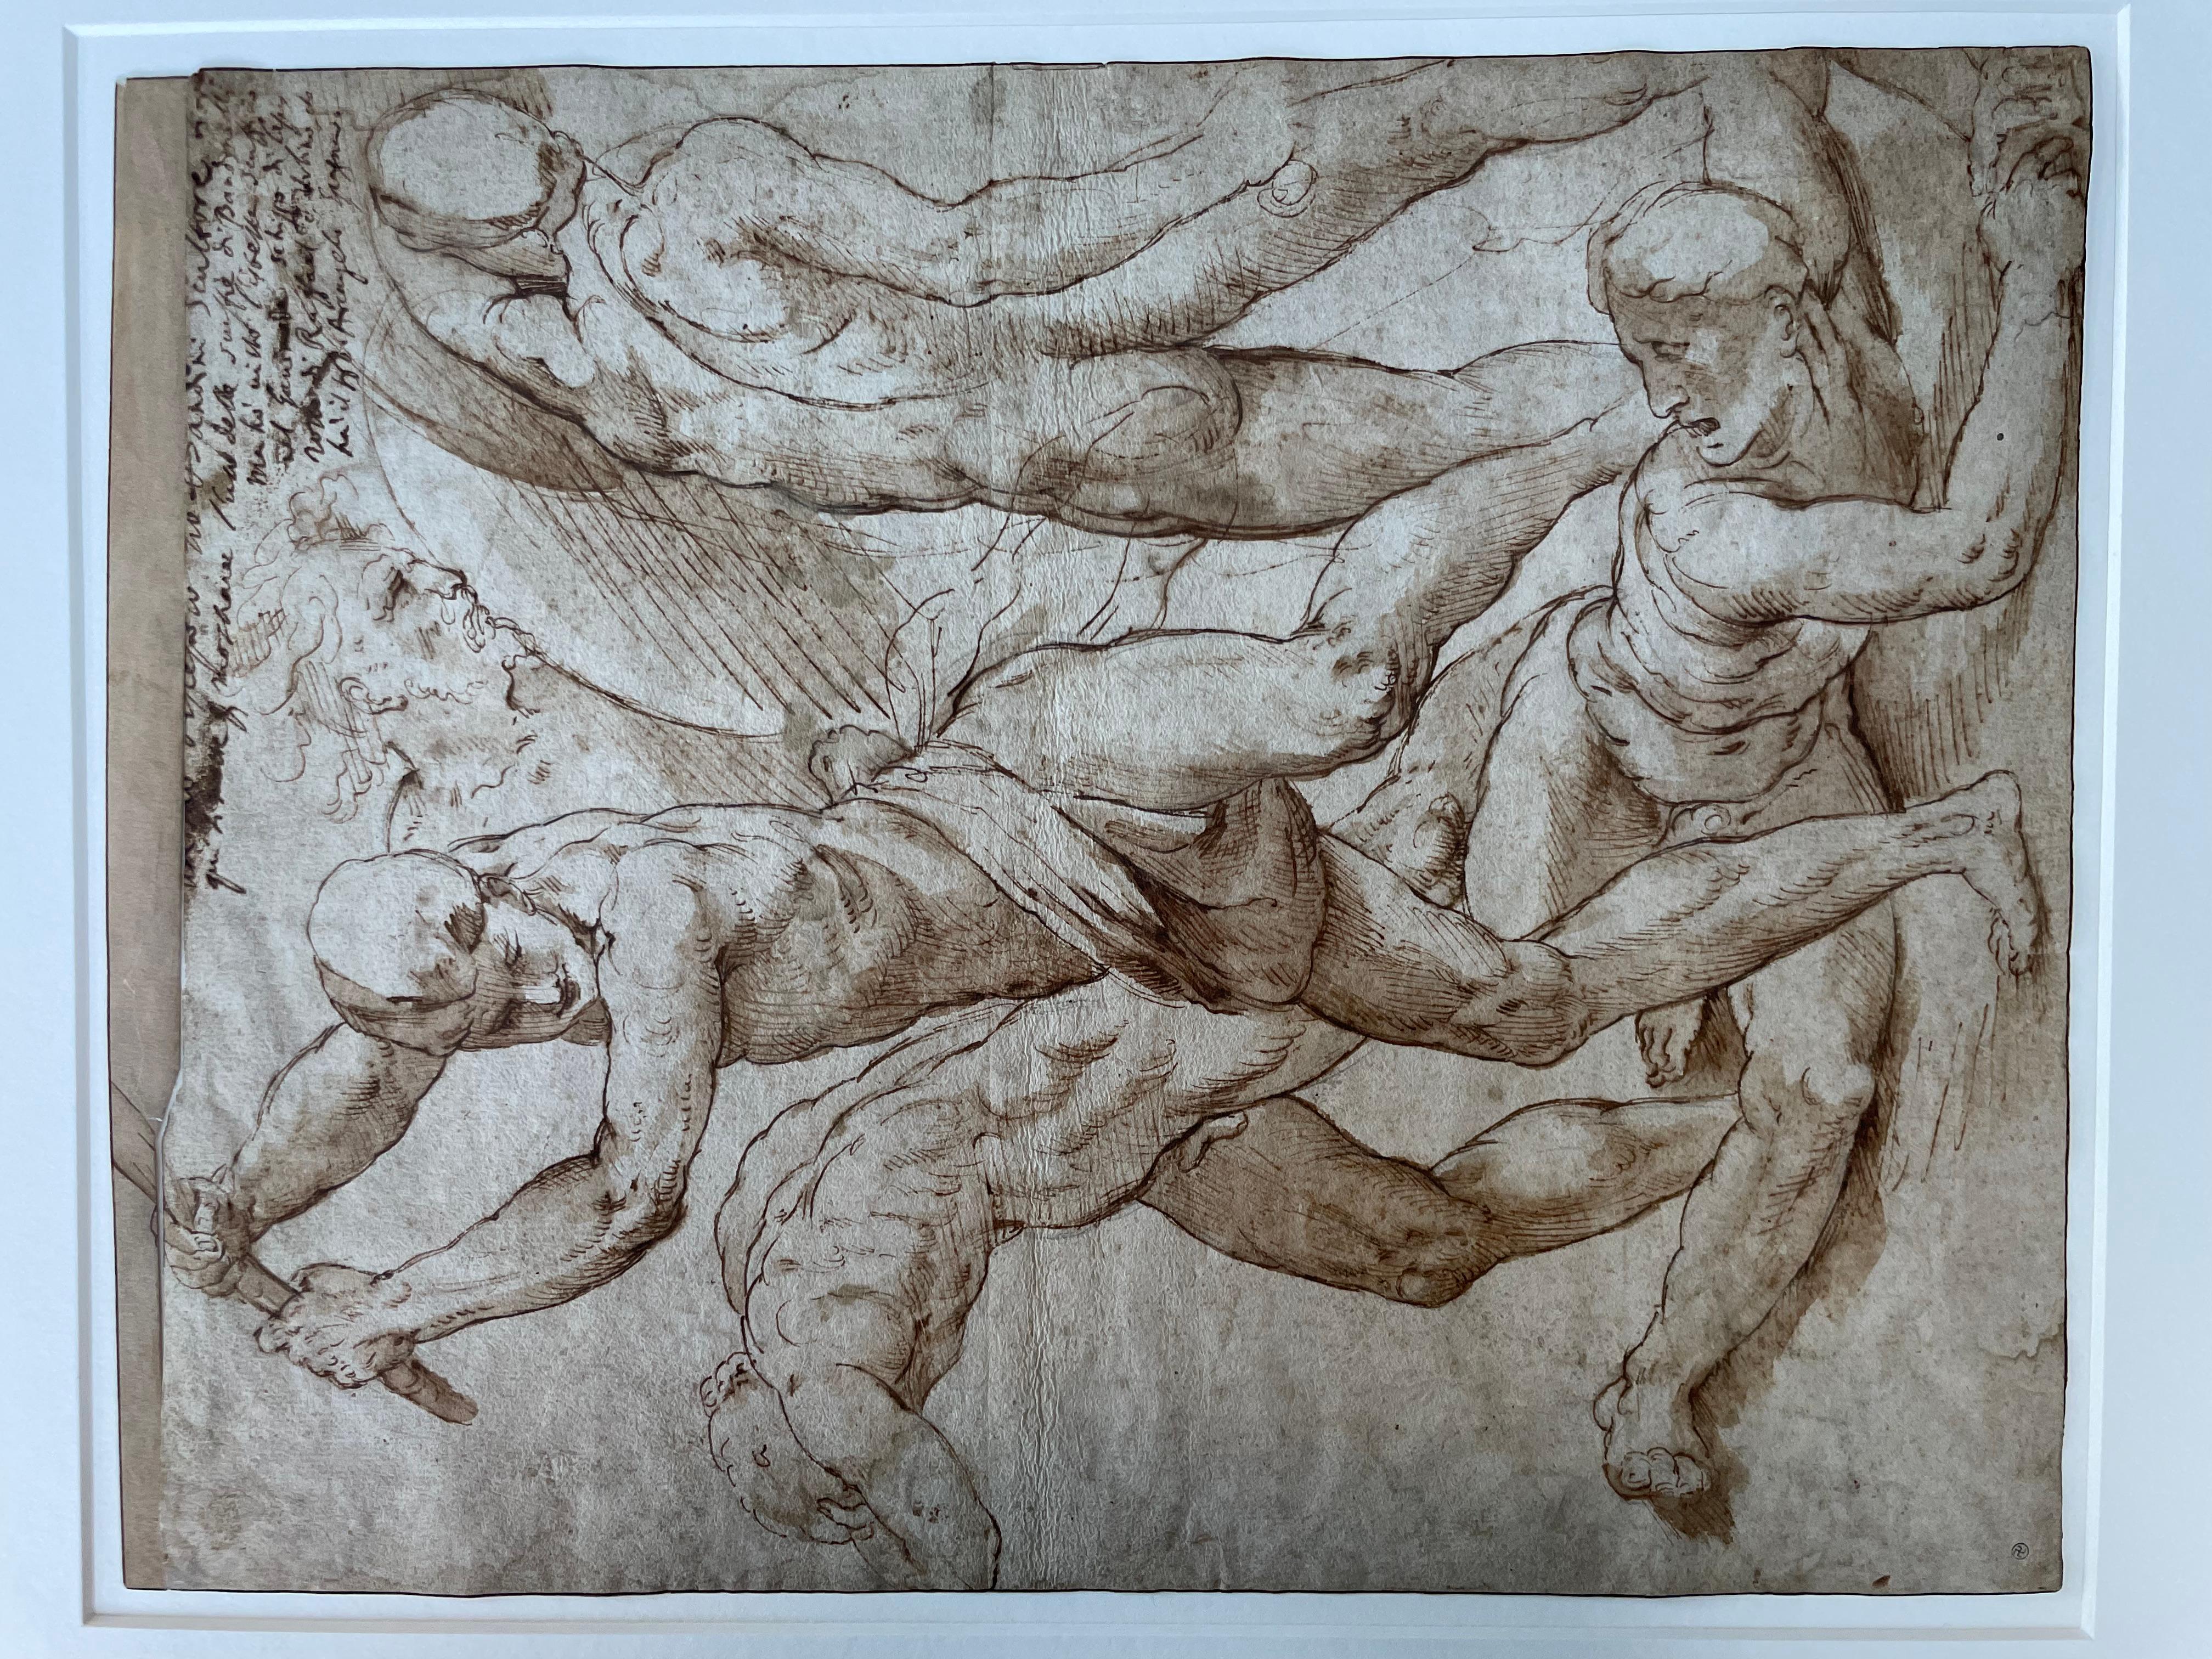 Jacopo Zanguidi Dit Bertoja (1544 - 1574) - Important 16th Century Drawing - Renaissance Art by Jacopo Zanguidi BERTOJA